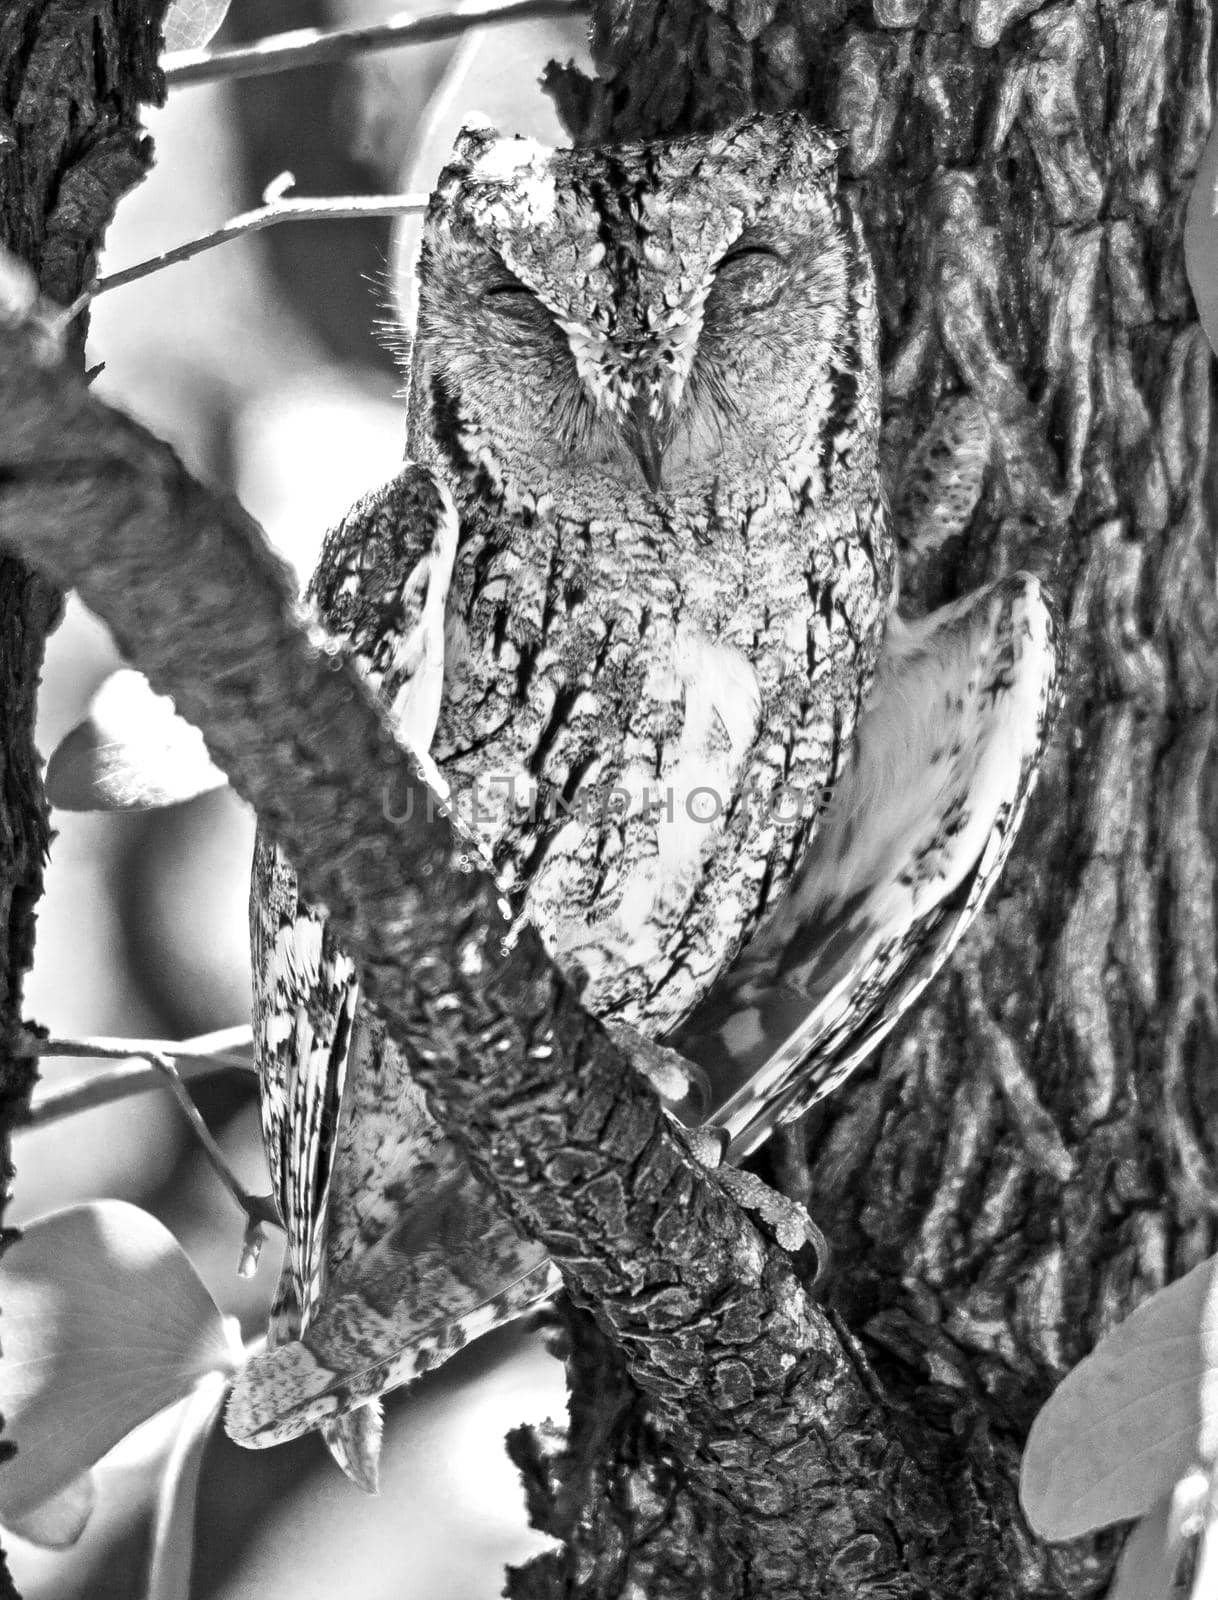 African Scops-Owl Otus senegalensis 13536 BW by kobus_peche